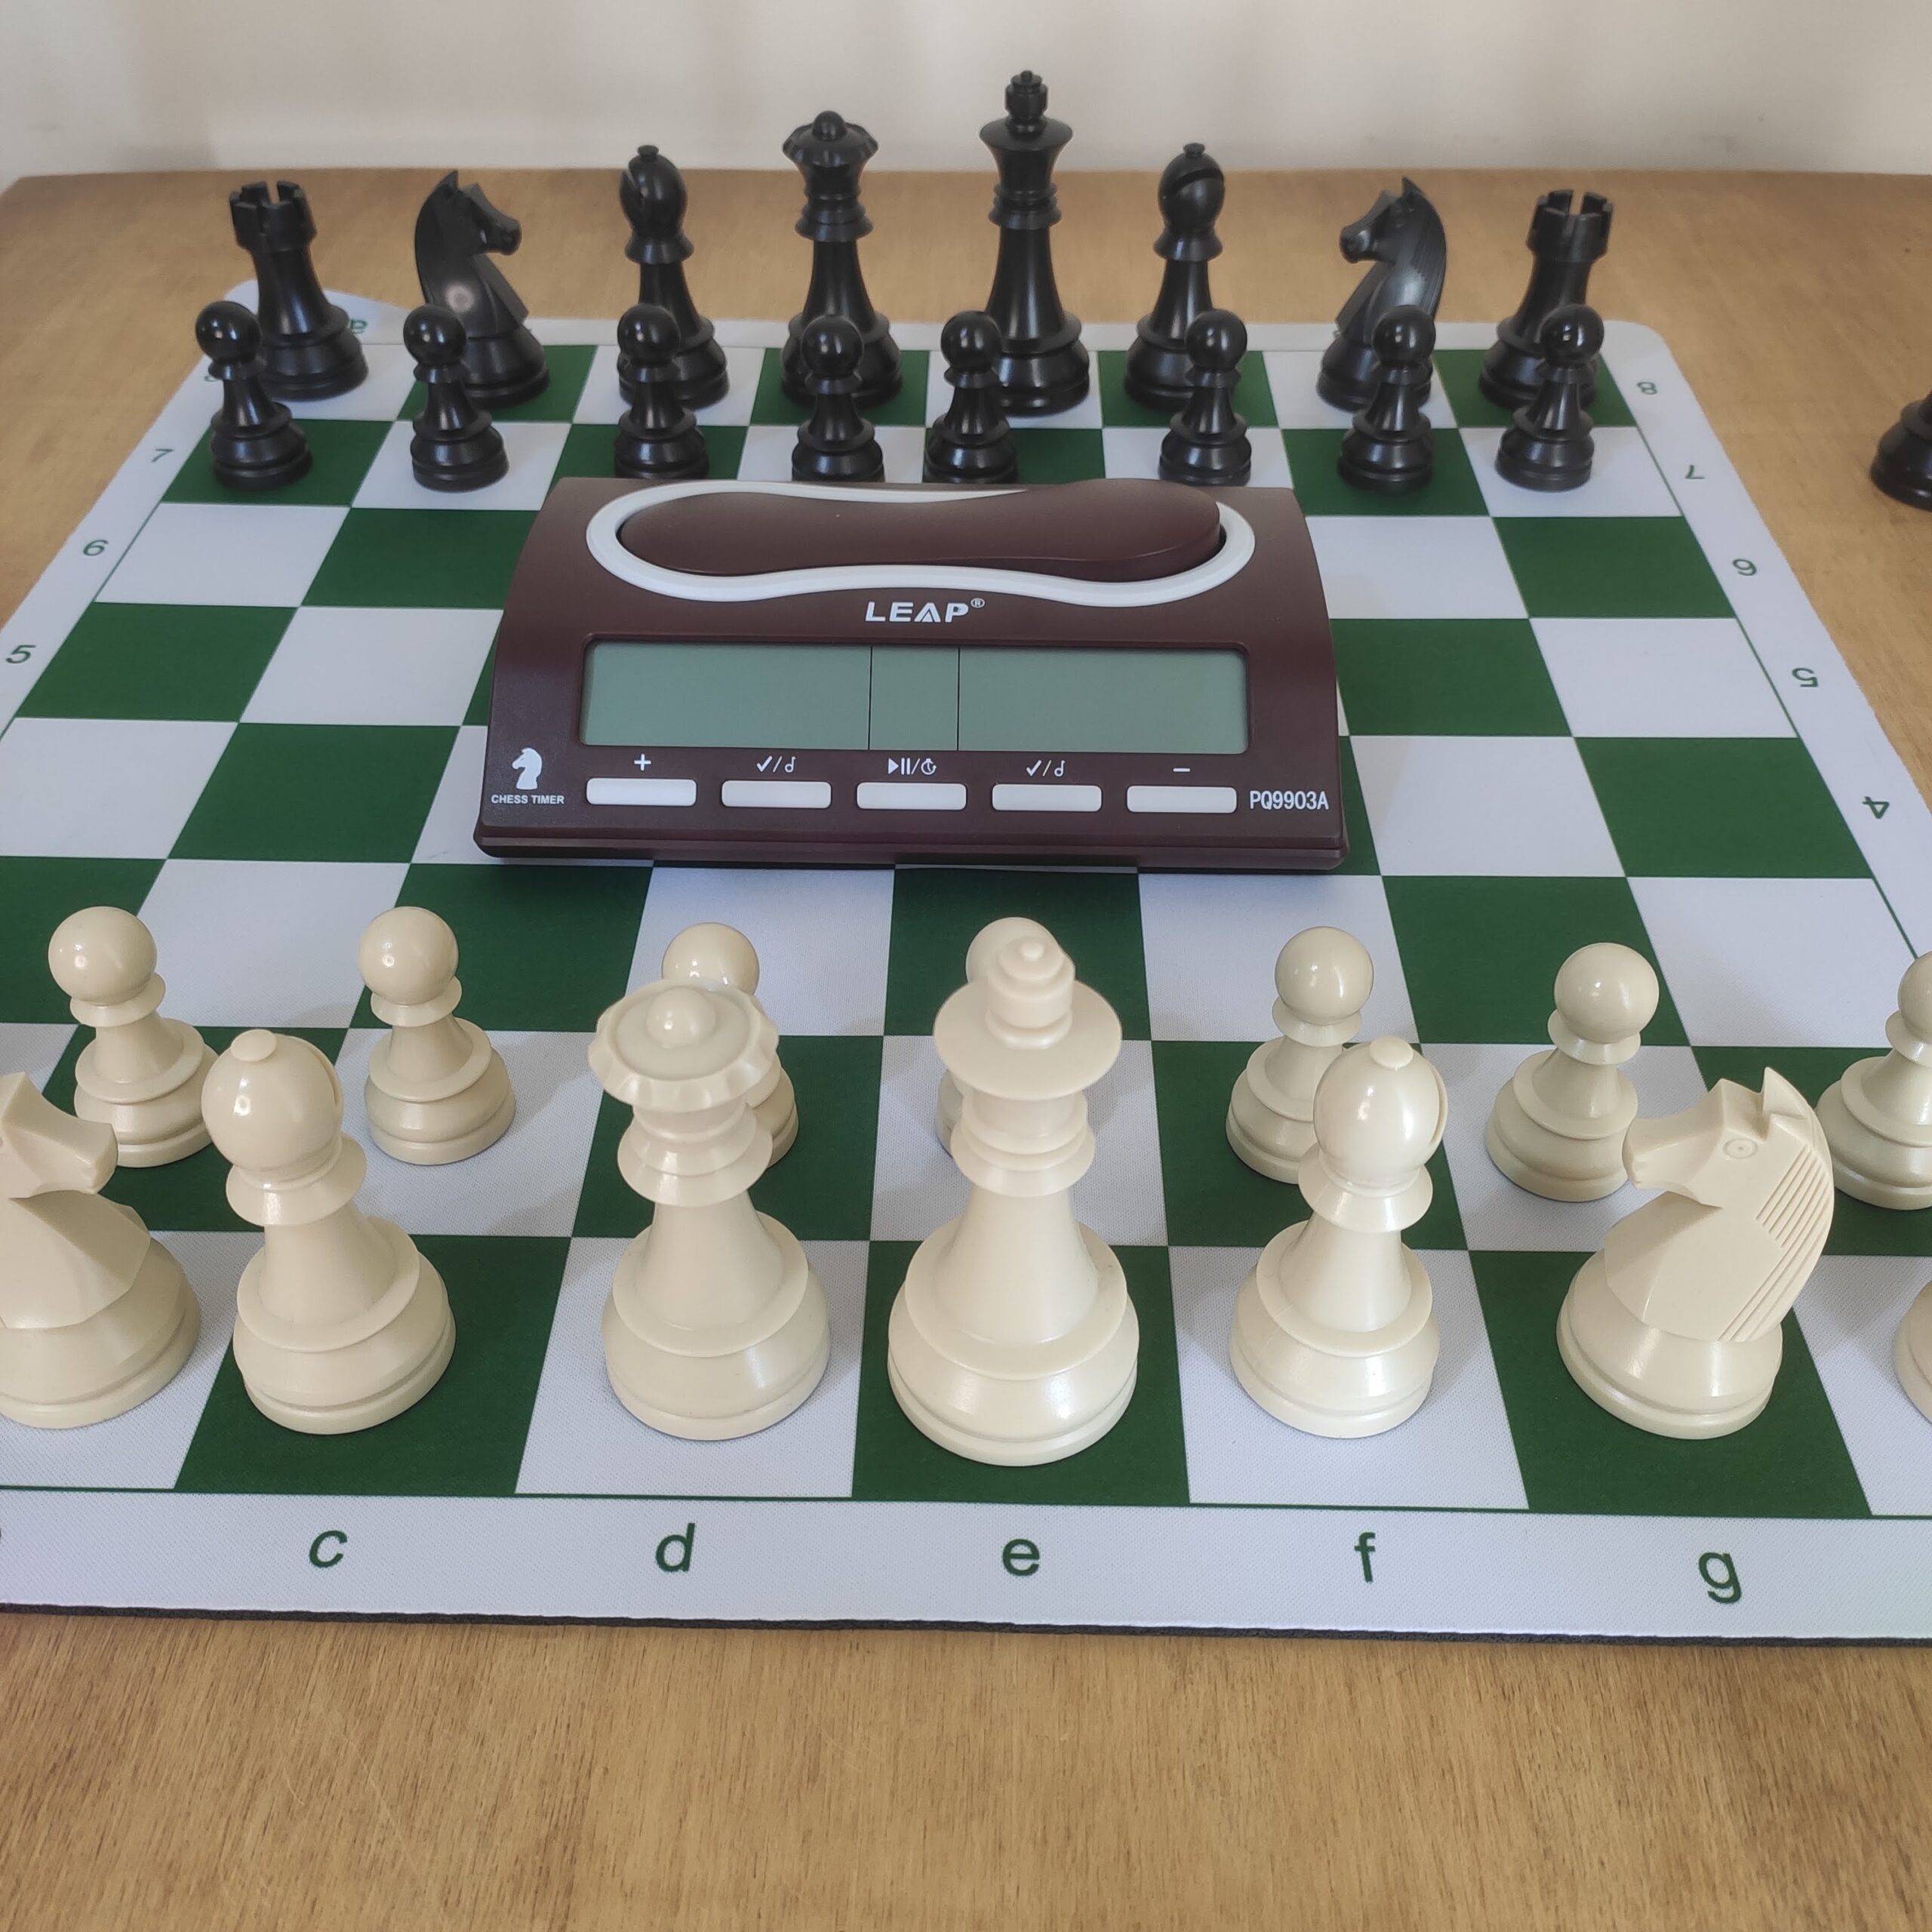 Kit Jogo de xadrez completo + Relógio Digital PQ9903A